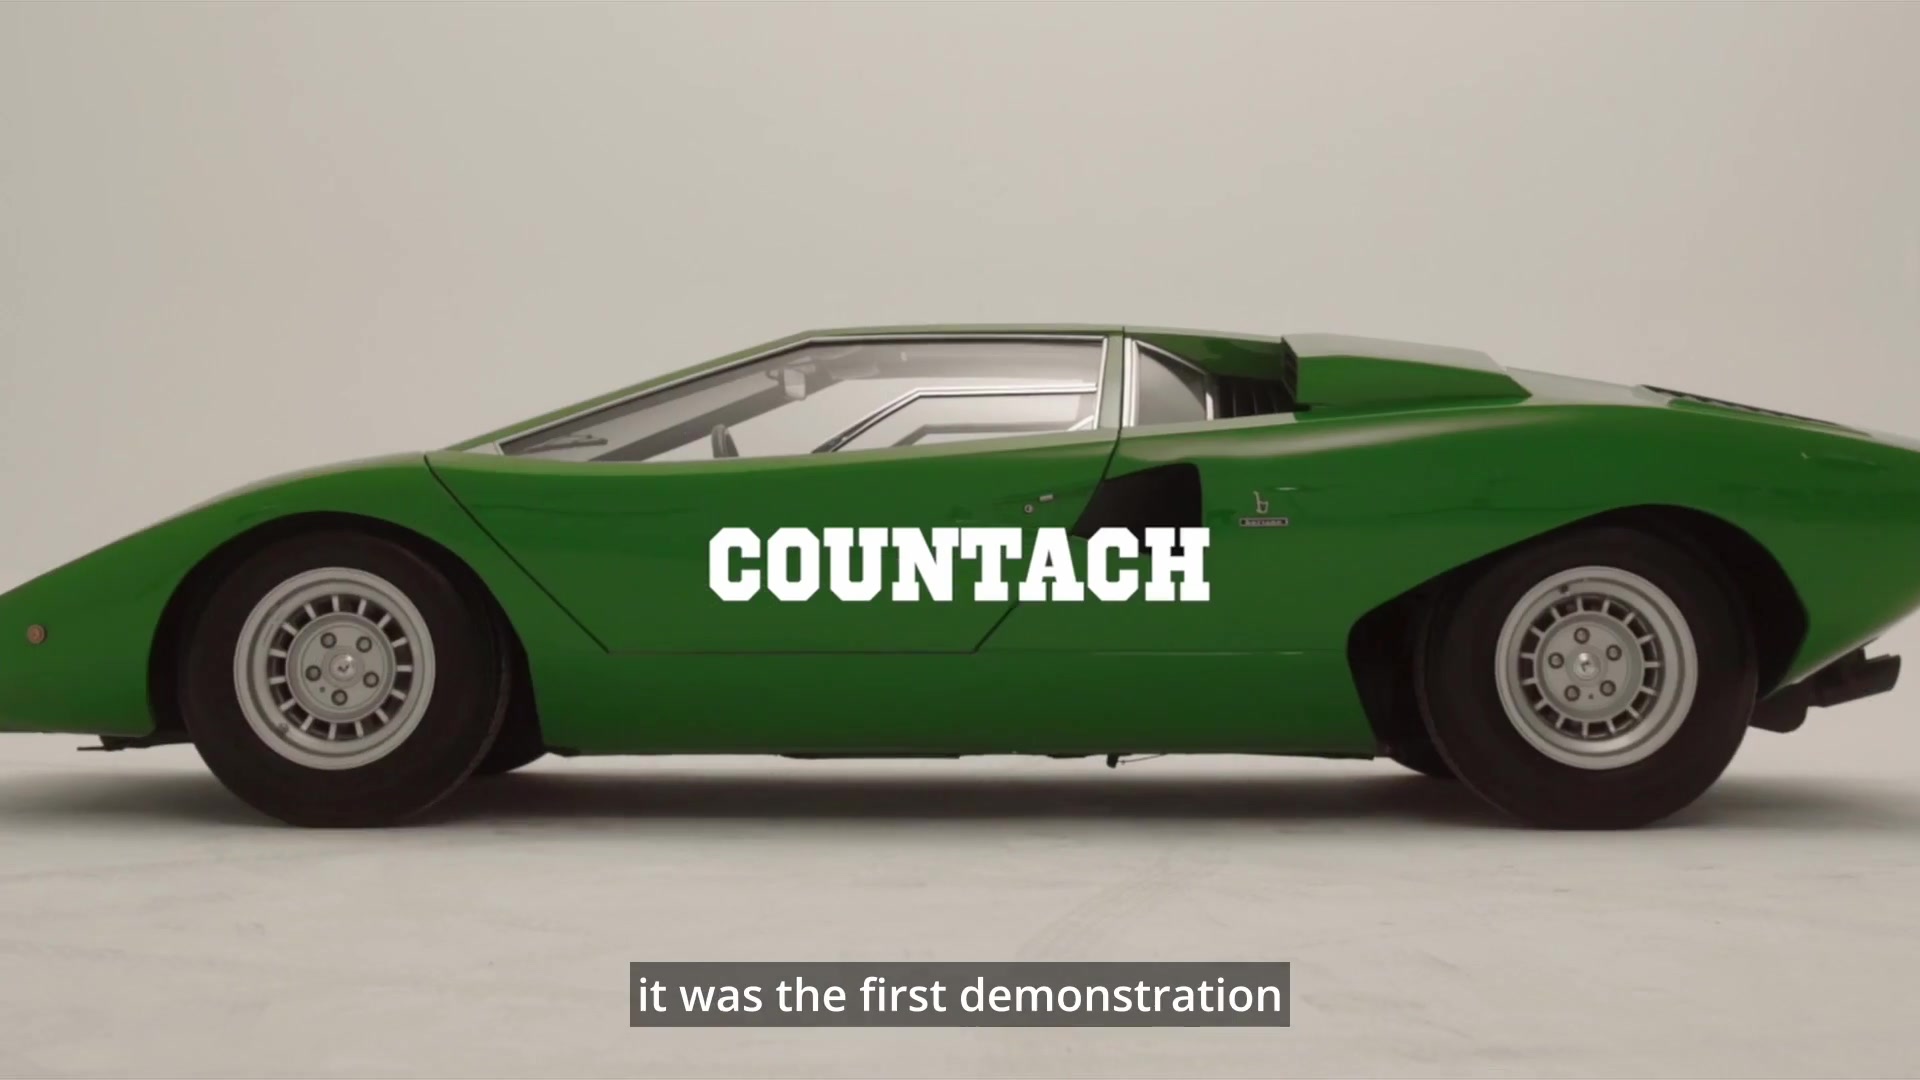 Lamborghini “The Icon Reborn” – an icon is born, not made